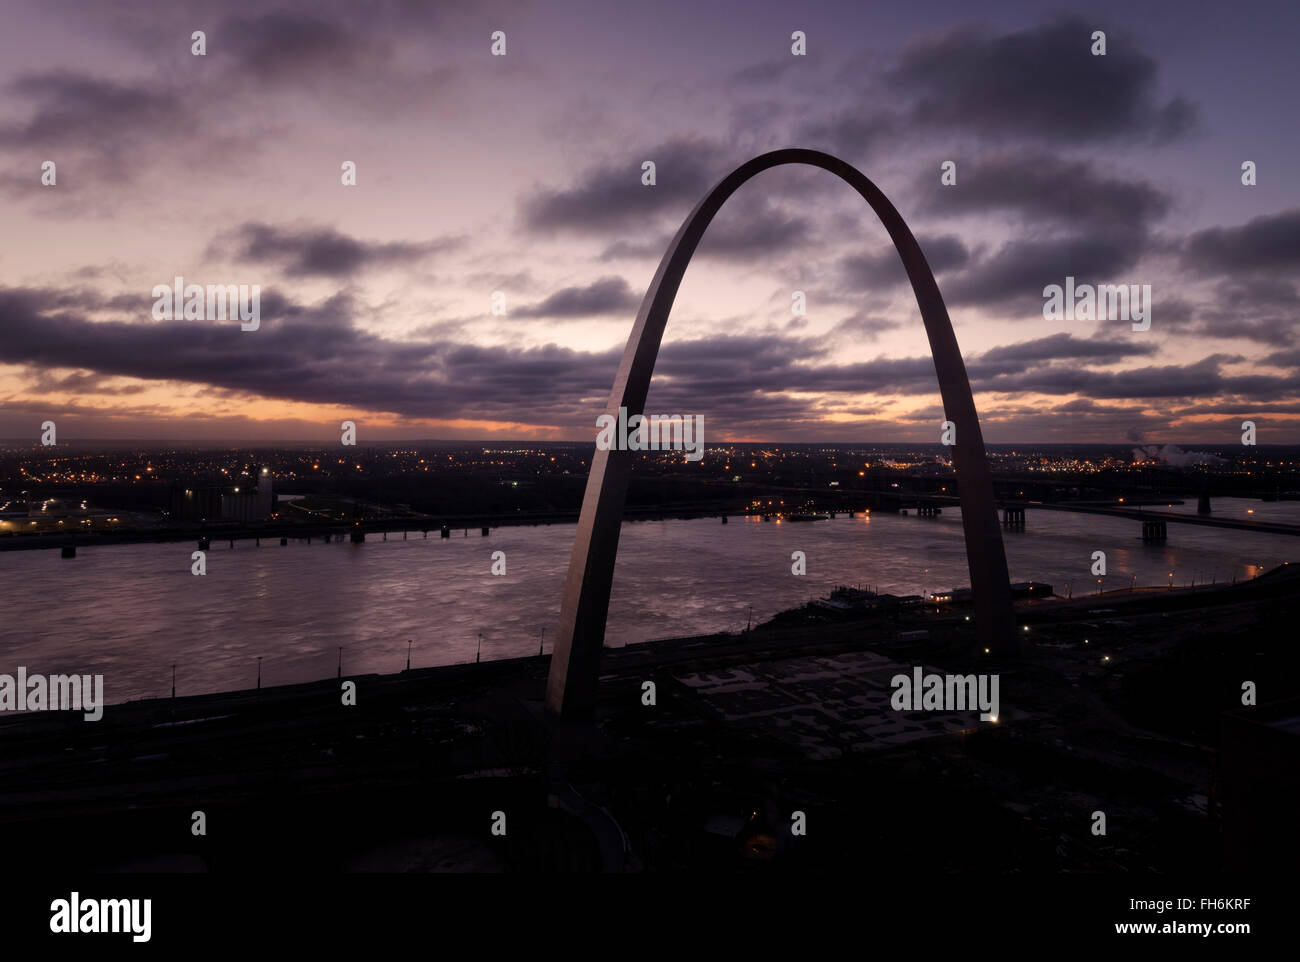 Saint Louis Arch Images – Browse 1,957 Stock Photos, Vectors, and Video